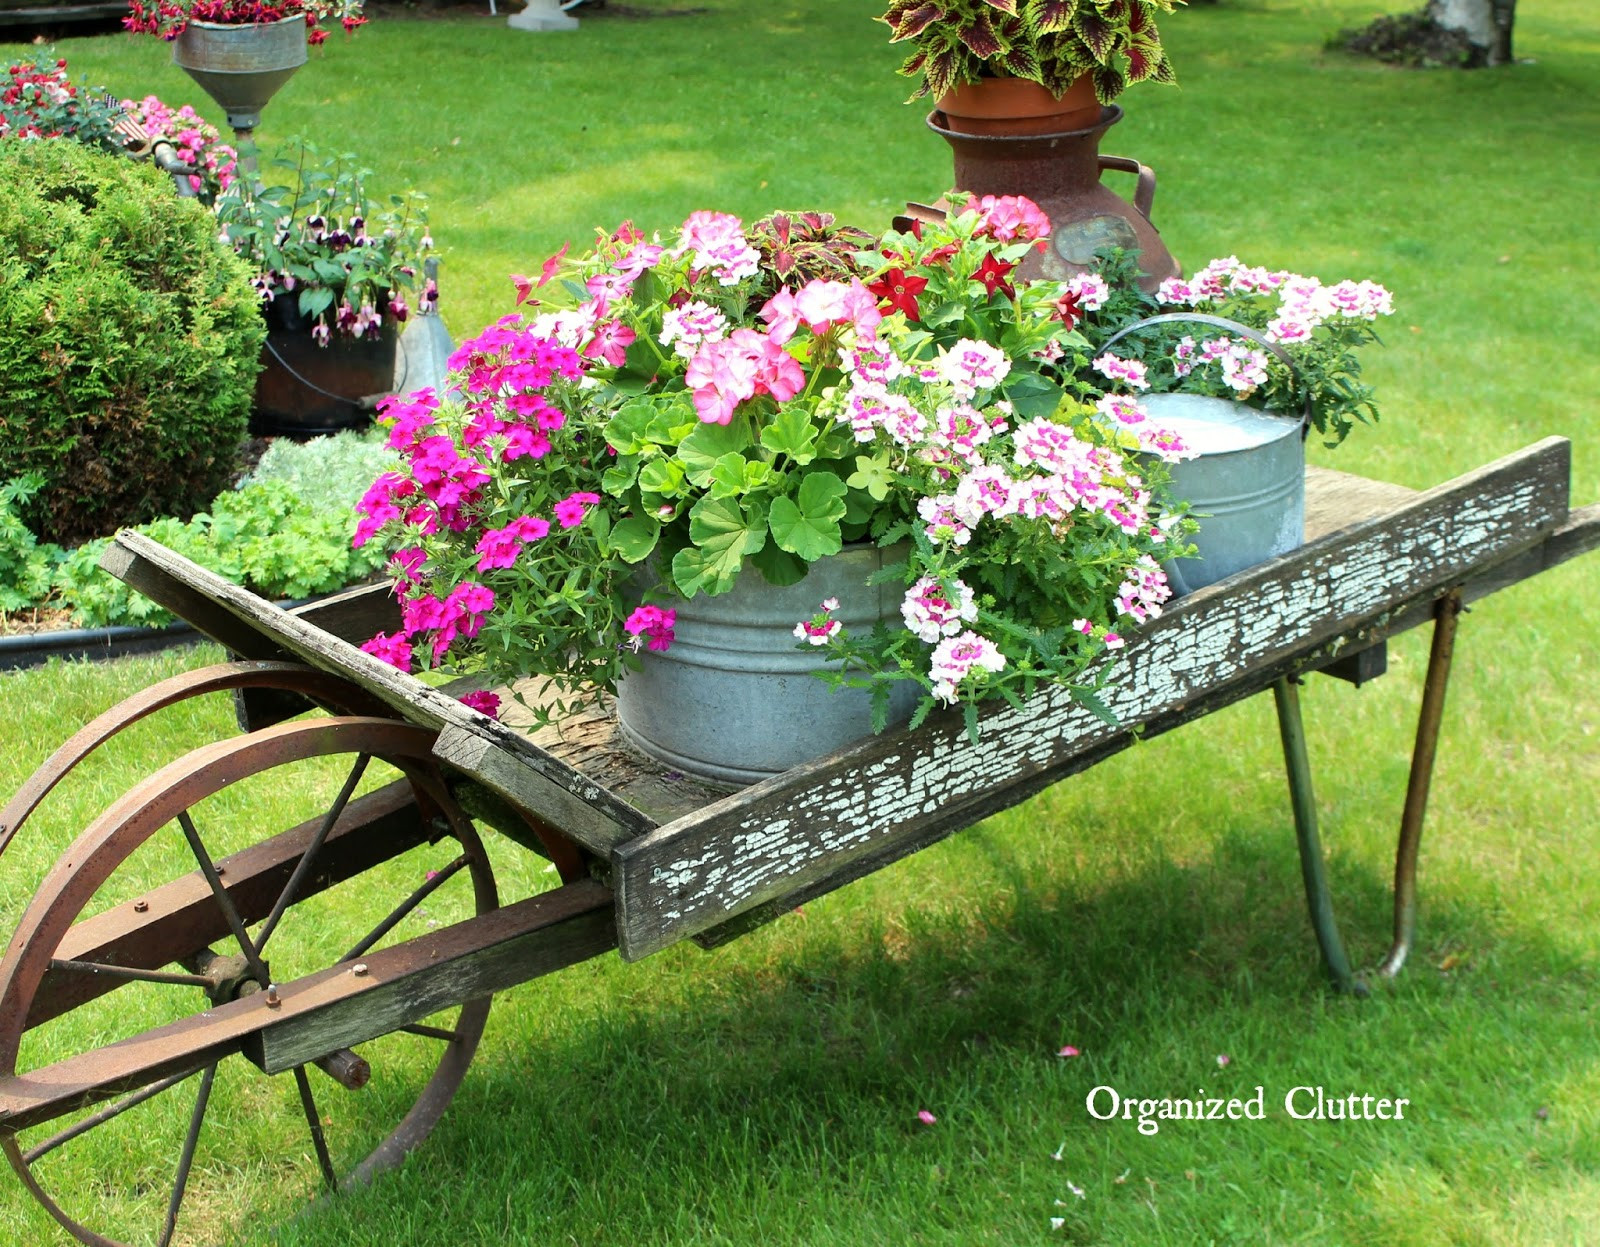 Best ideas about Rustic Garden Ideas
. Save or Pin Rustic Garden Wheelbarrow 2015 Now.